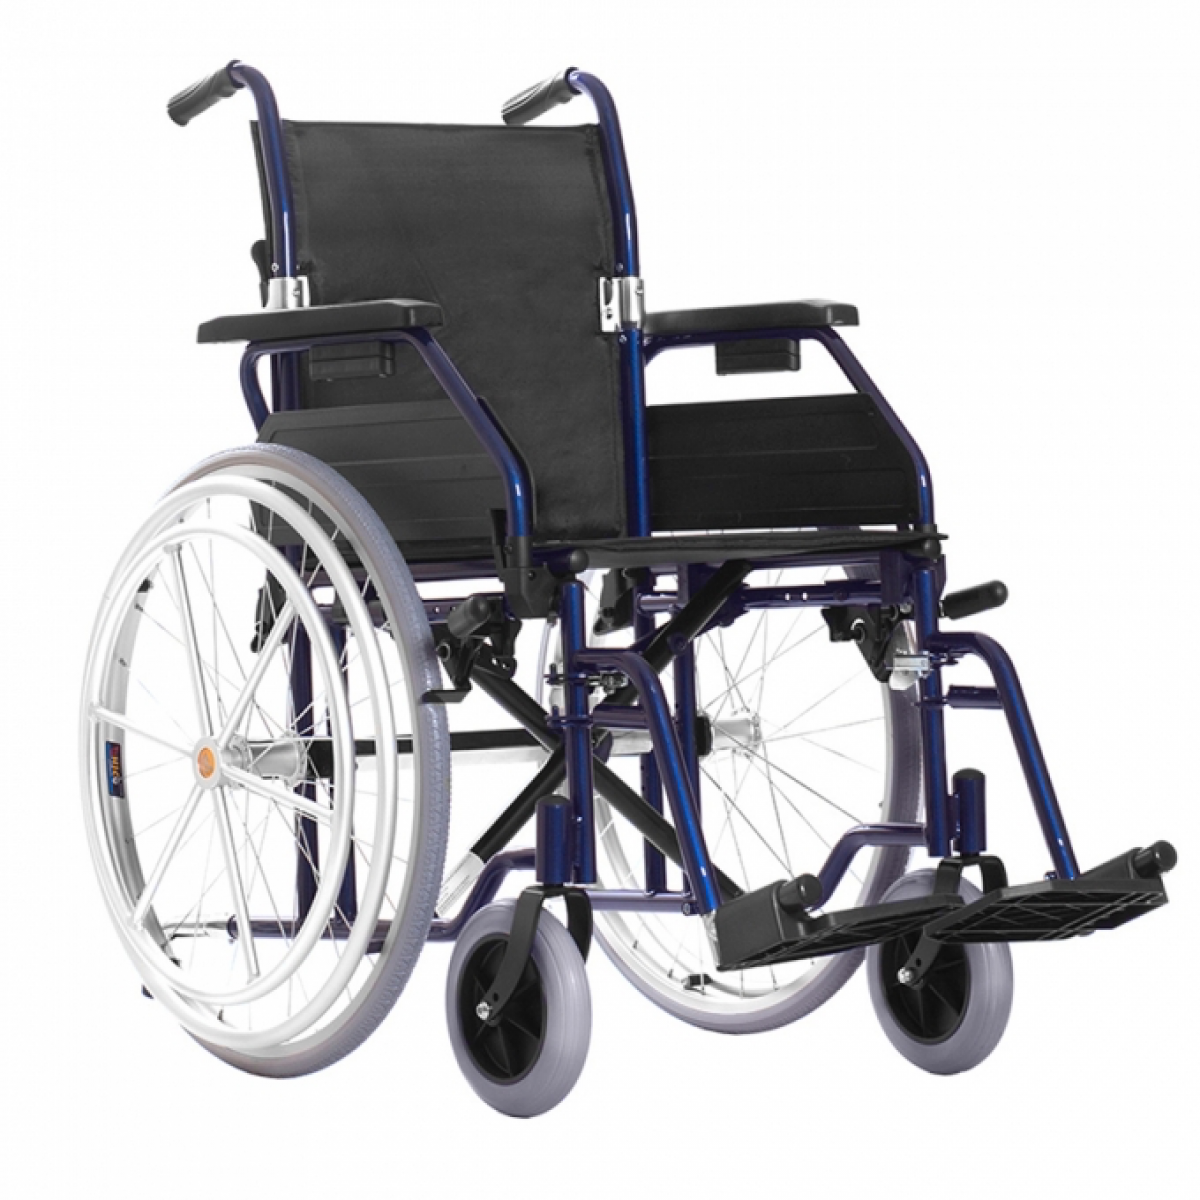 Коляска ортоника цена. Ortonica Base 180-18uu. Инвалидное кресло-коляска Ортоника. Инвалидное кресло Ортоника. Кресло коляска для инвалидов Ортоника.